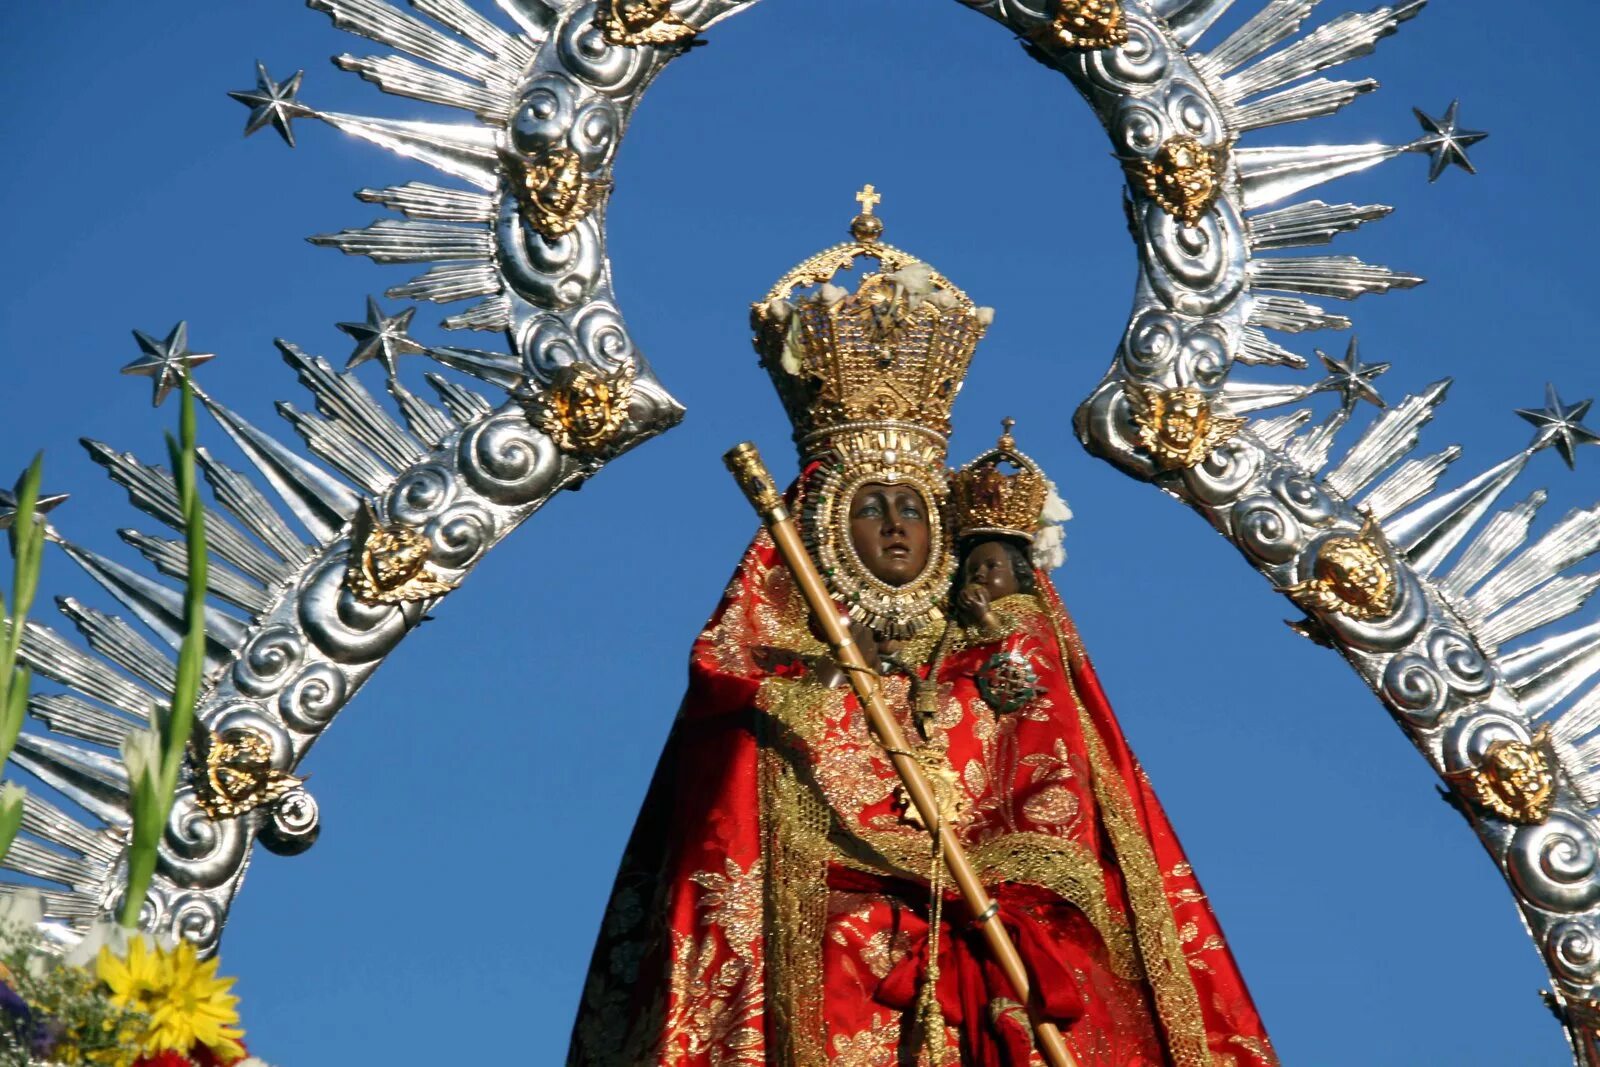 Фестиваль Romeria de nuestra senora de le cabeza. Статуя Богоматери Нуэстра-сеньора-де-ла-Кабеса. La Virgen de Moscu пиво. La virgen москва